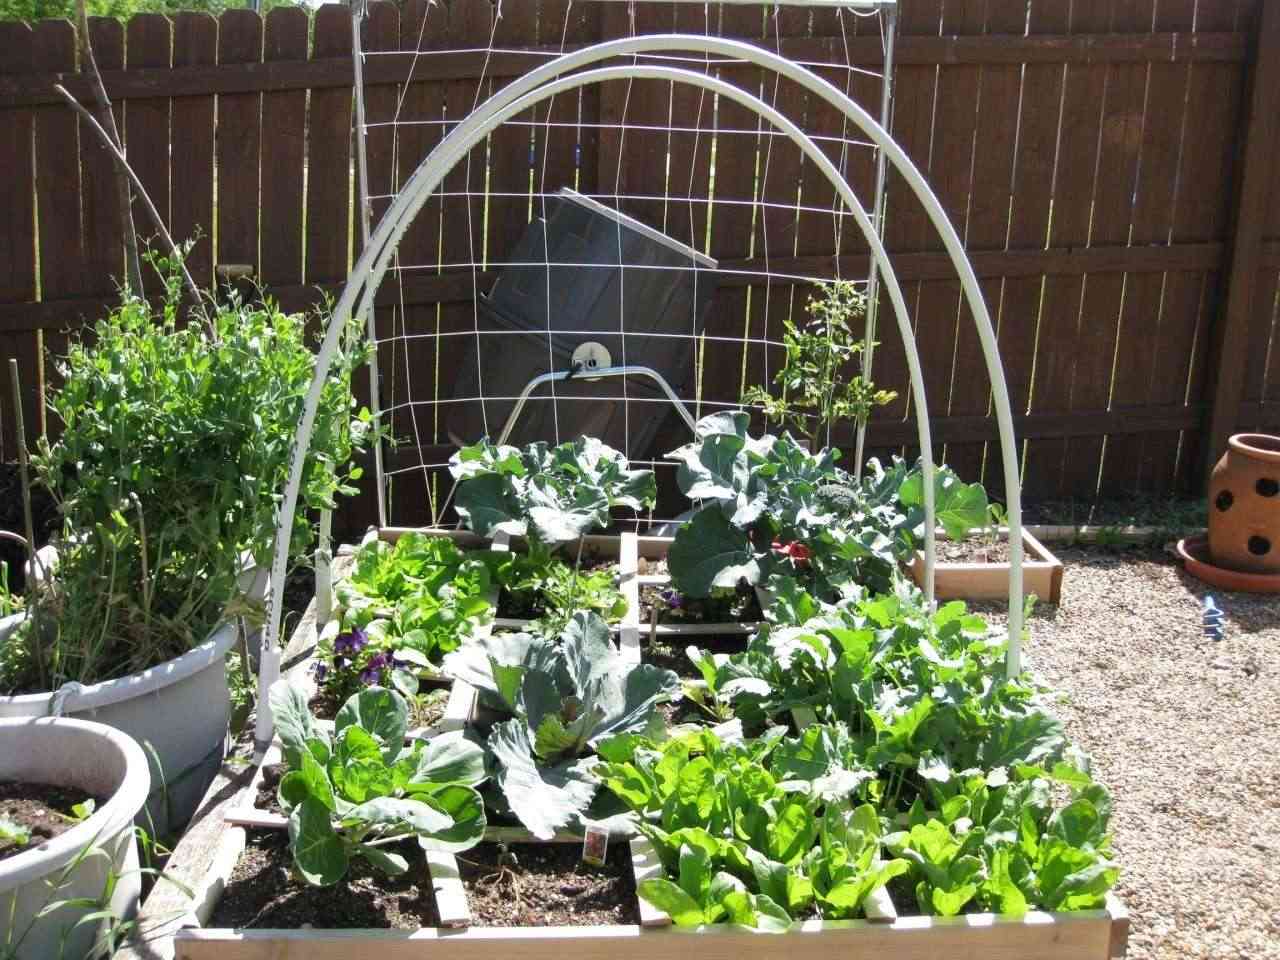 strawberries - My transformed row garden to a beautiful SFG Img_4610